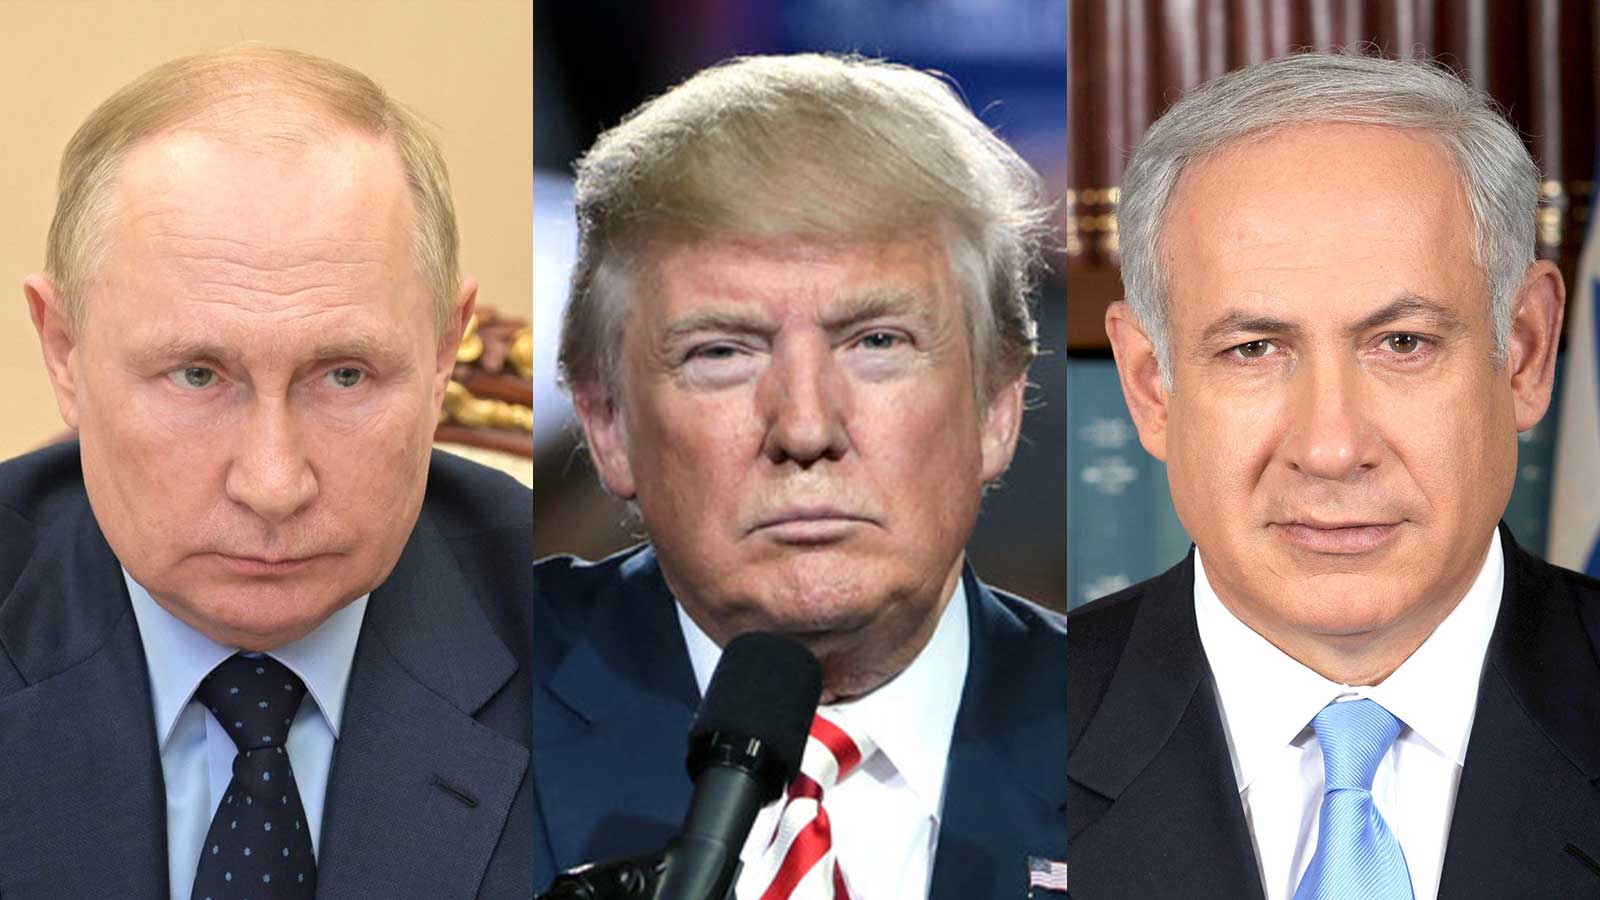 Putin, Trump and Netanyahu unveil the terrifying perils of strongman rule